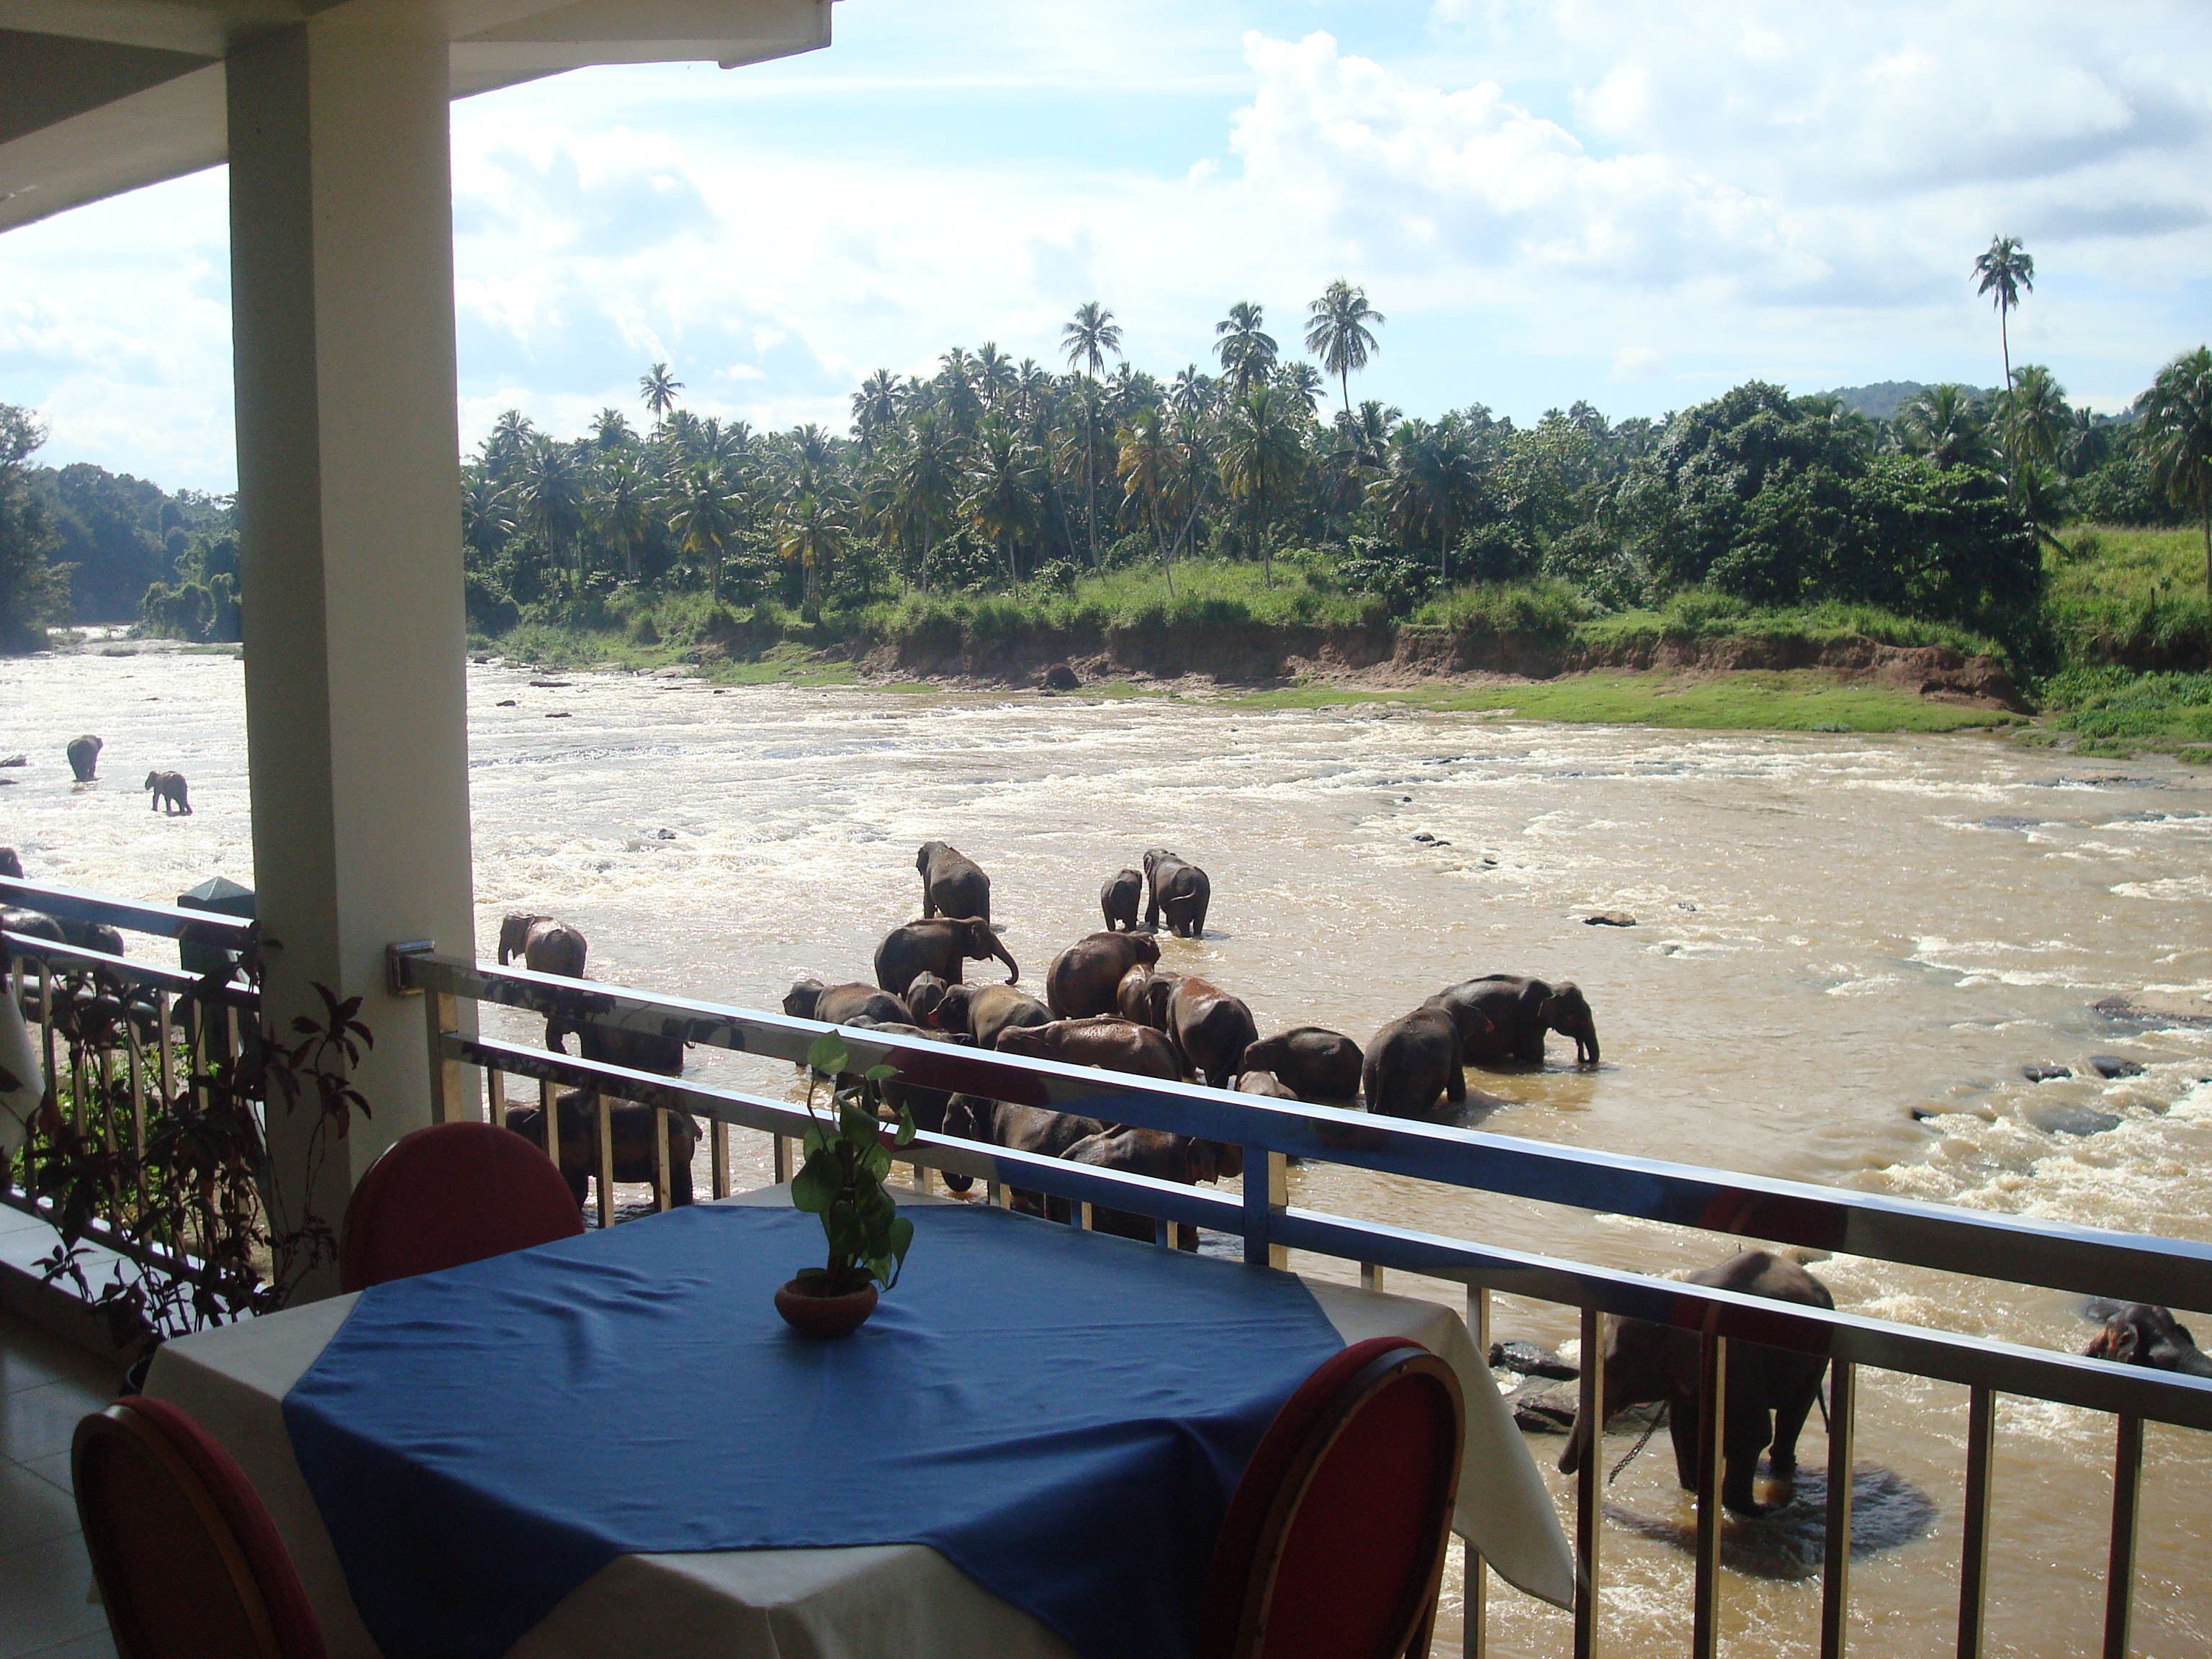 View from Pinnalanda hotel in Sri Lanka of elephants bathing in the river